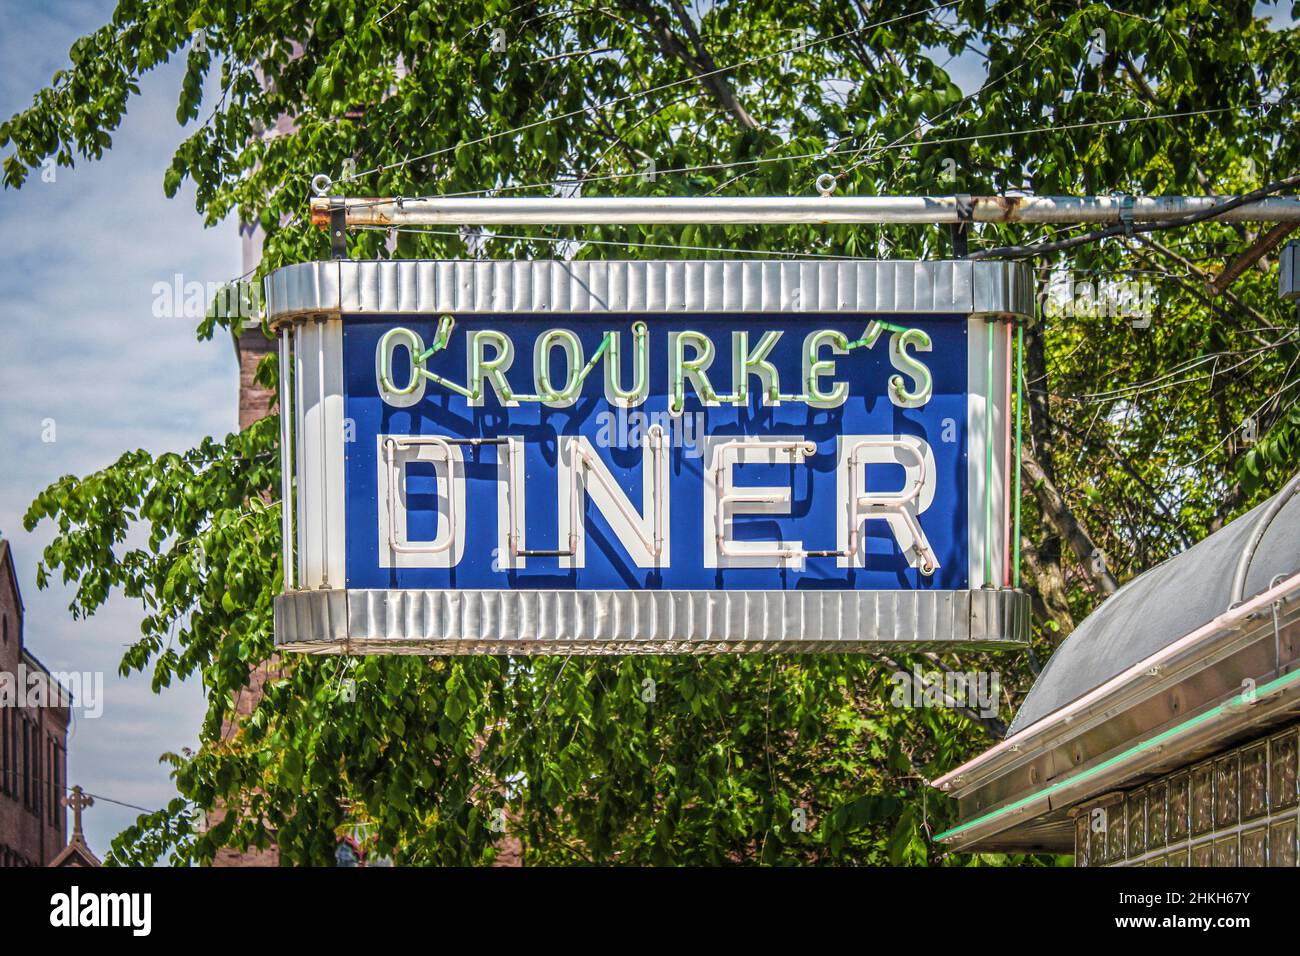 04-25-2015 Middletown CT USA Retro neon diner sign -ORourkes - University hangout on main street Stock Photo